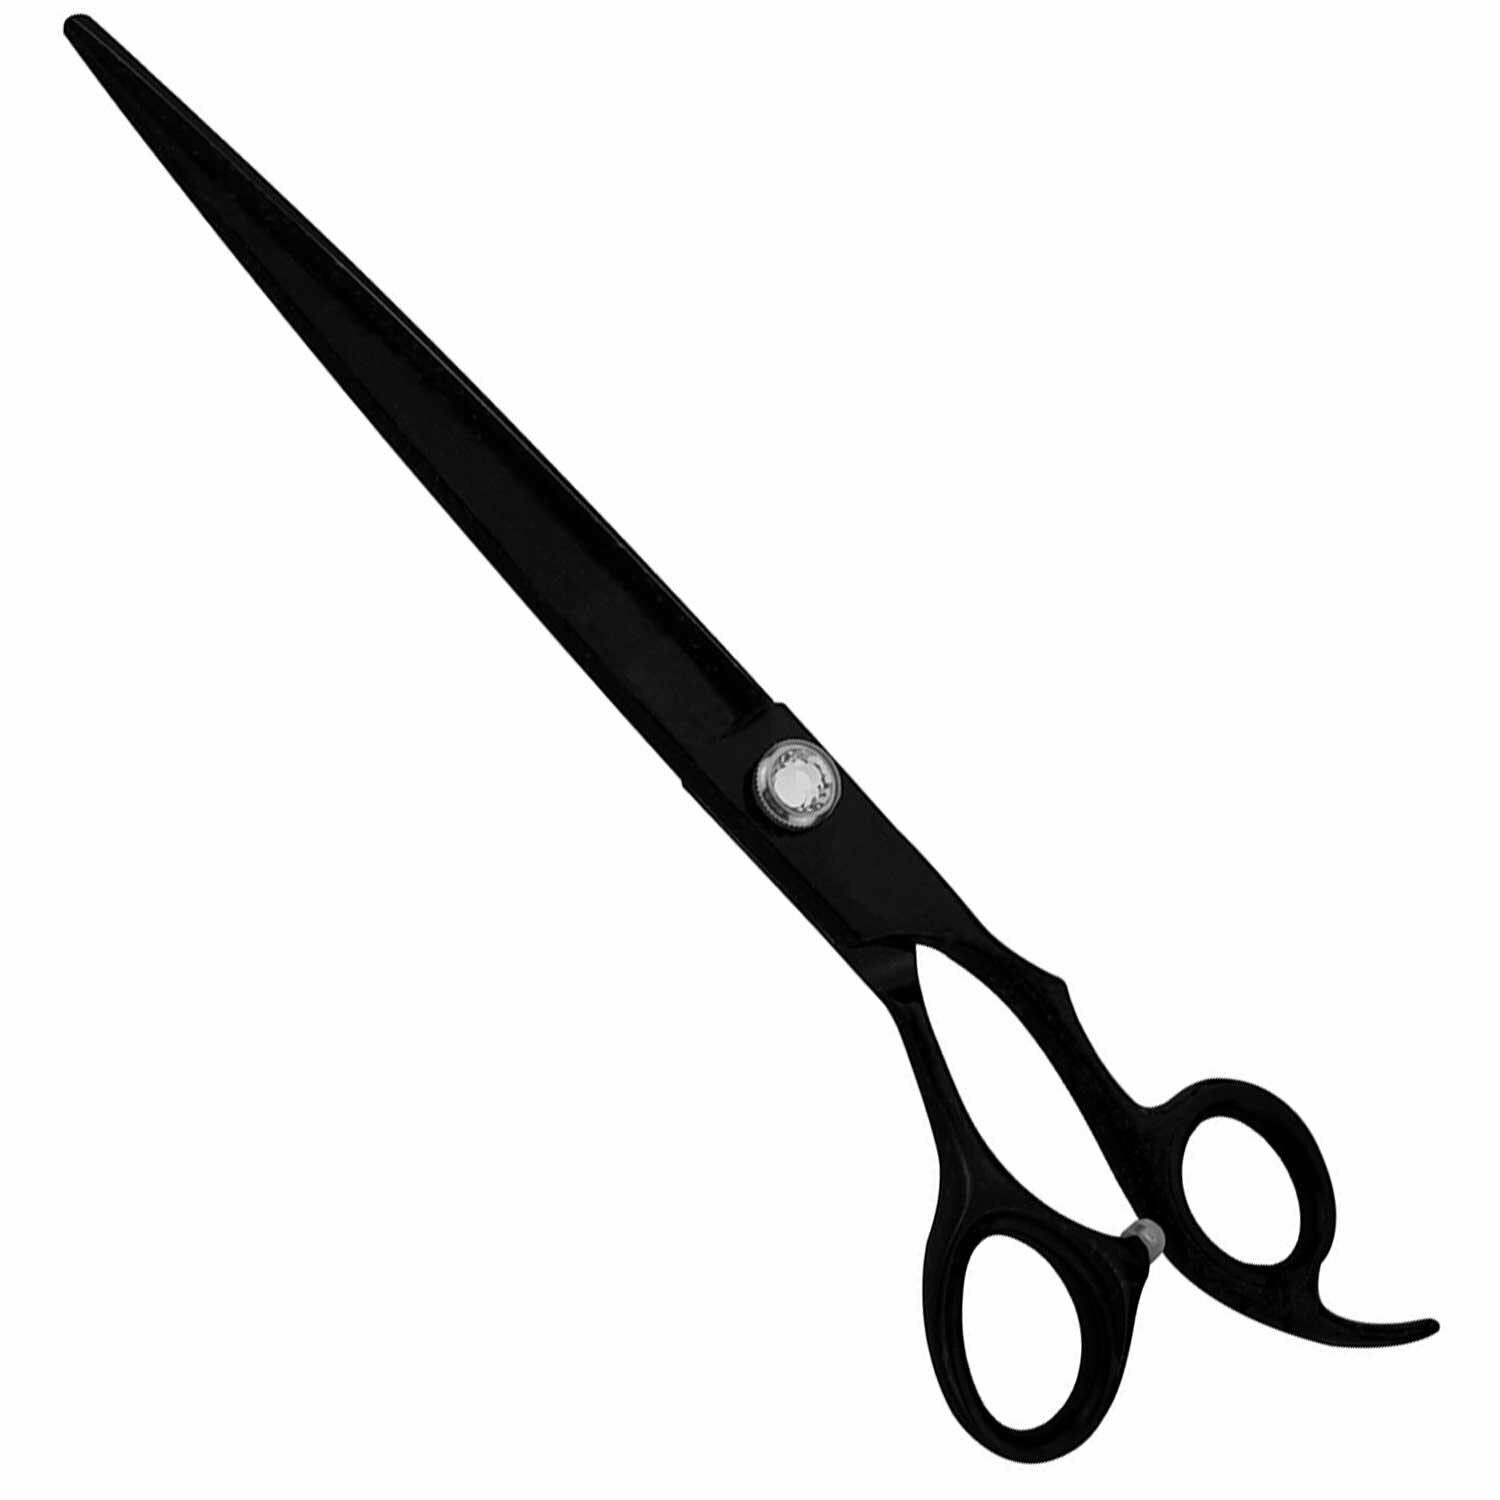 Japanese steel hair scissors 21.5 cm Black Titan